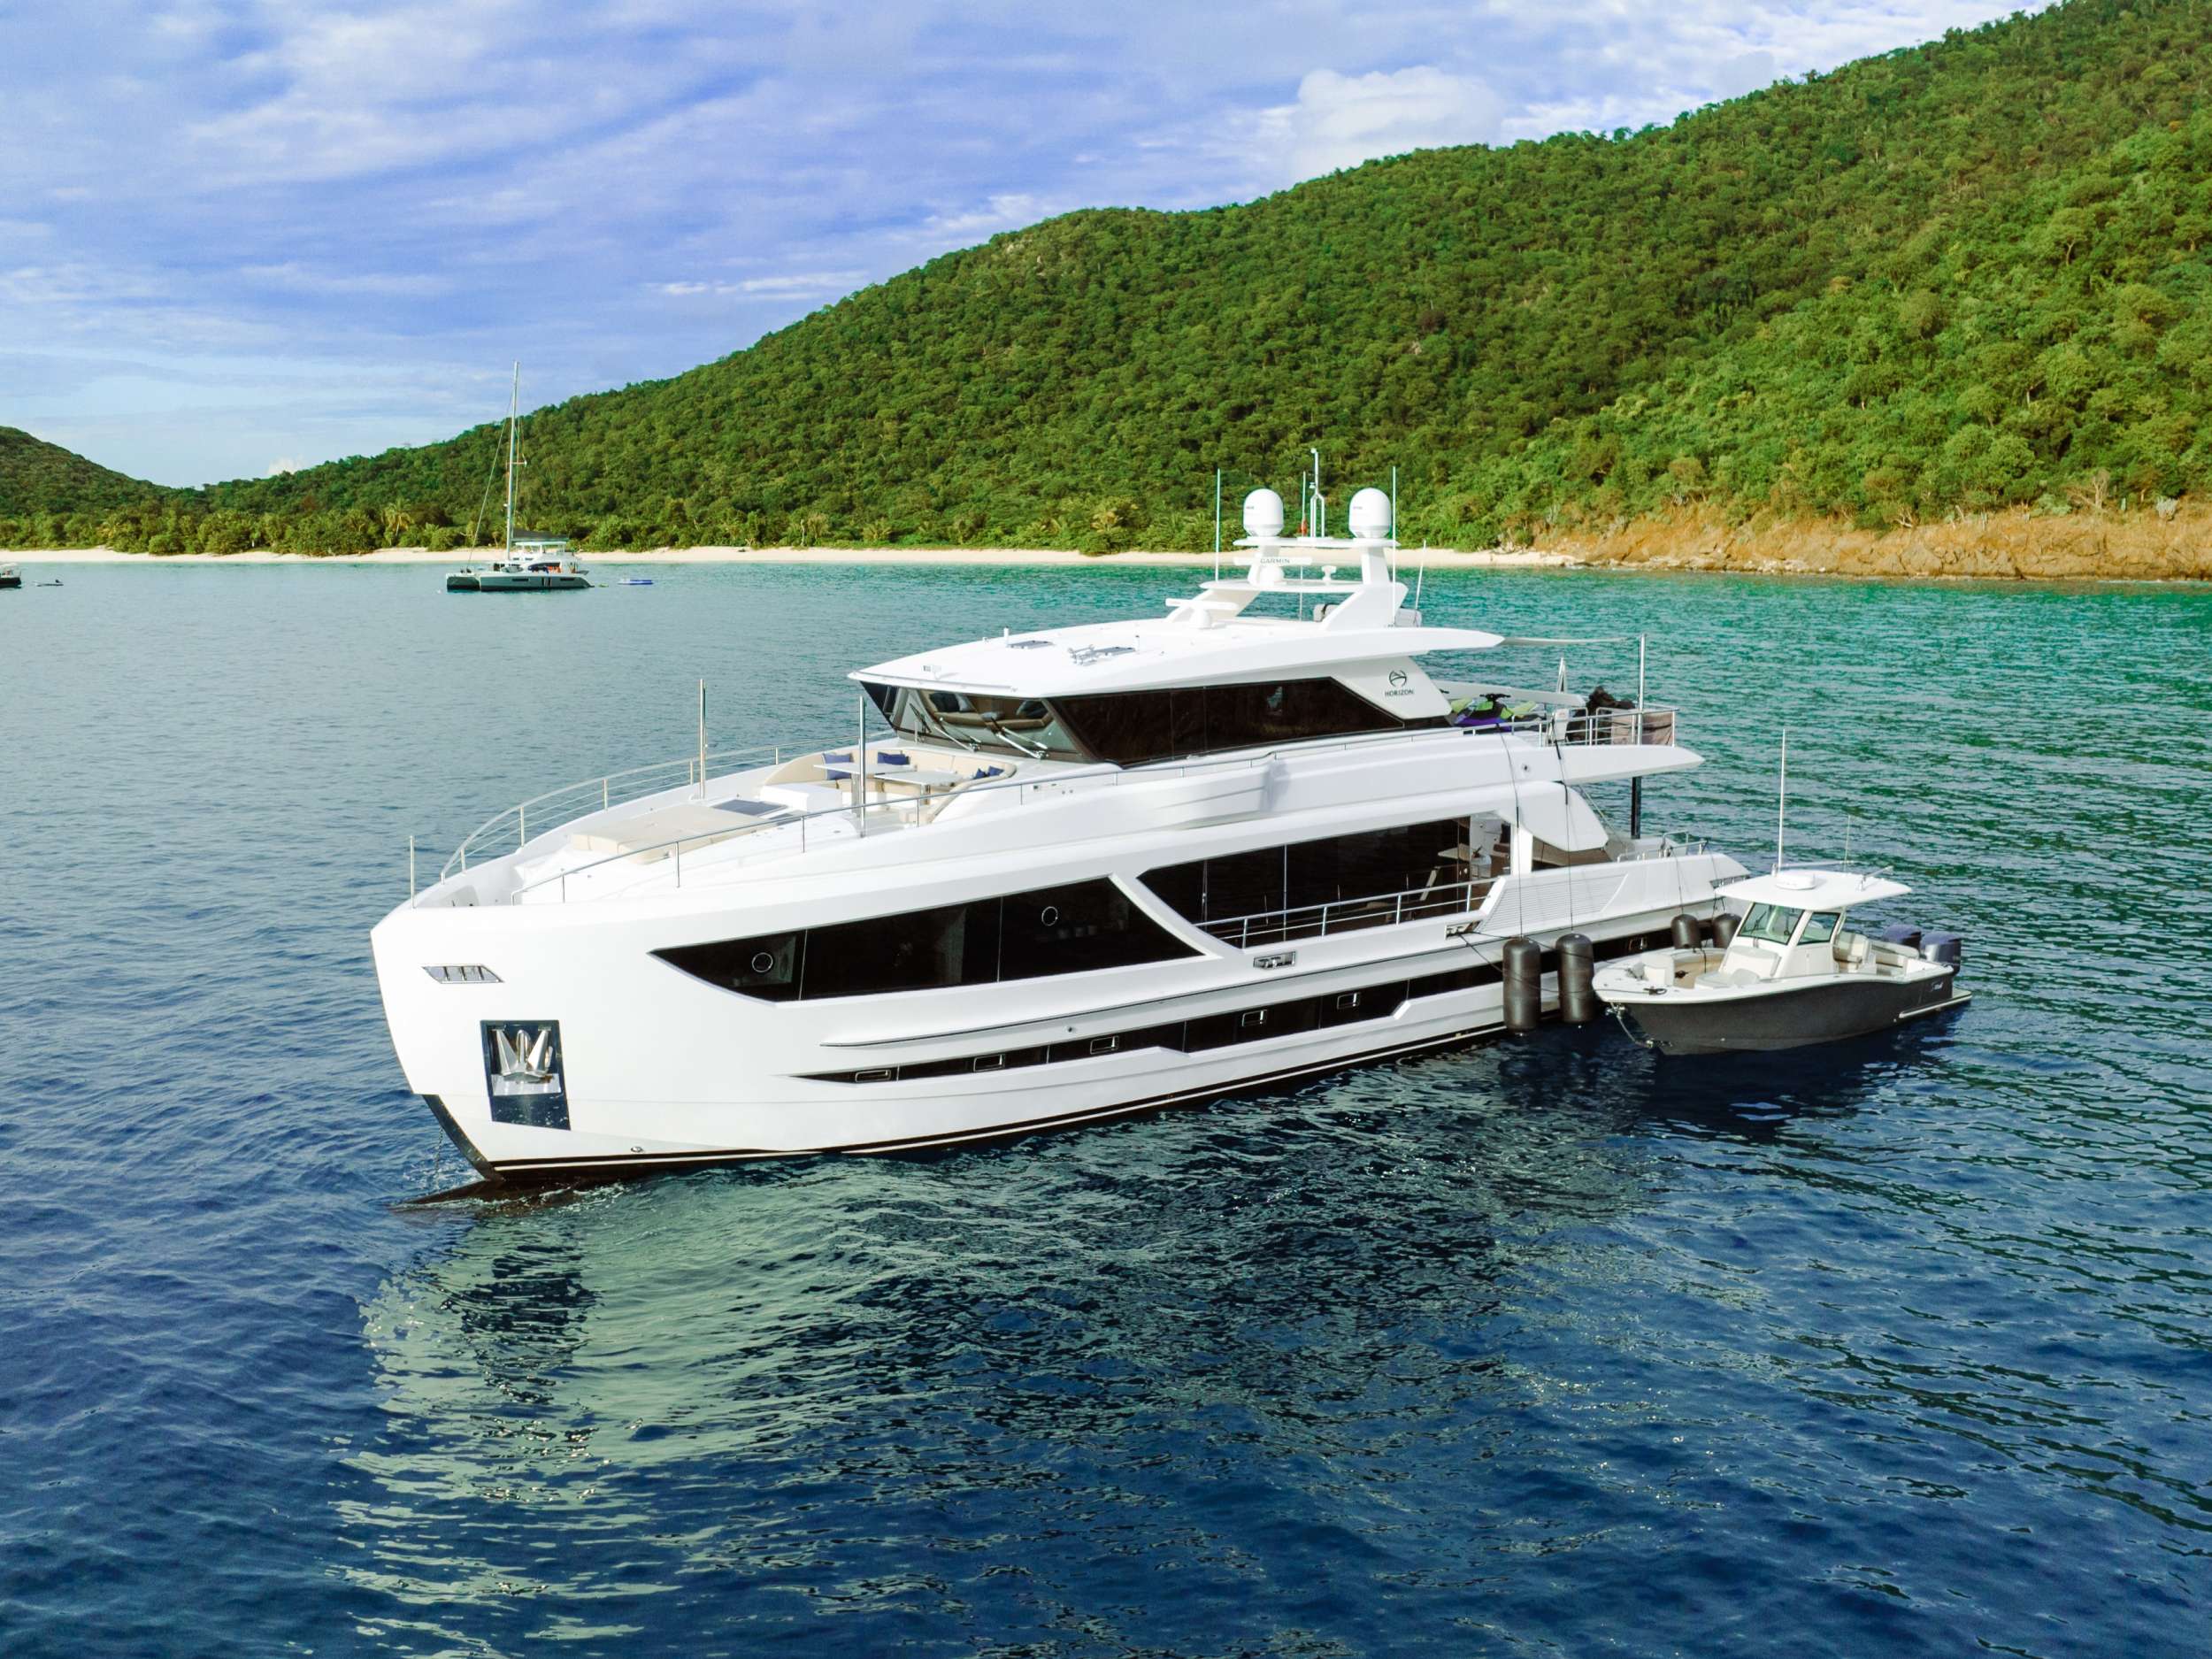 Aqua Life Crewed Horizon FD90 Motoryacht Charter Cruising the Bahamas